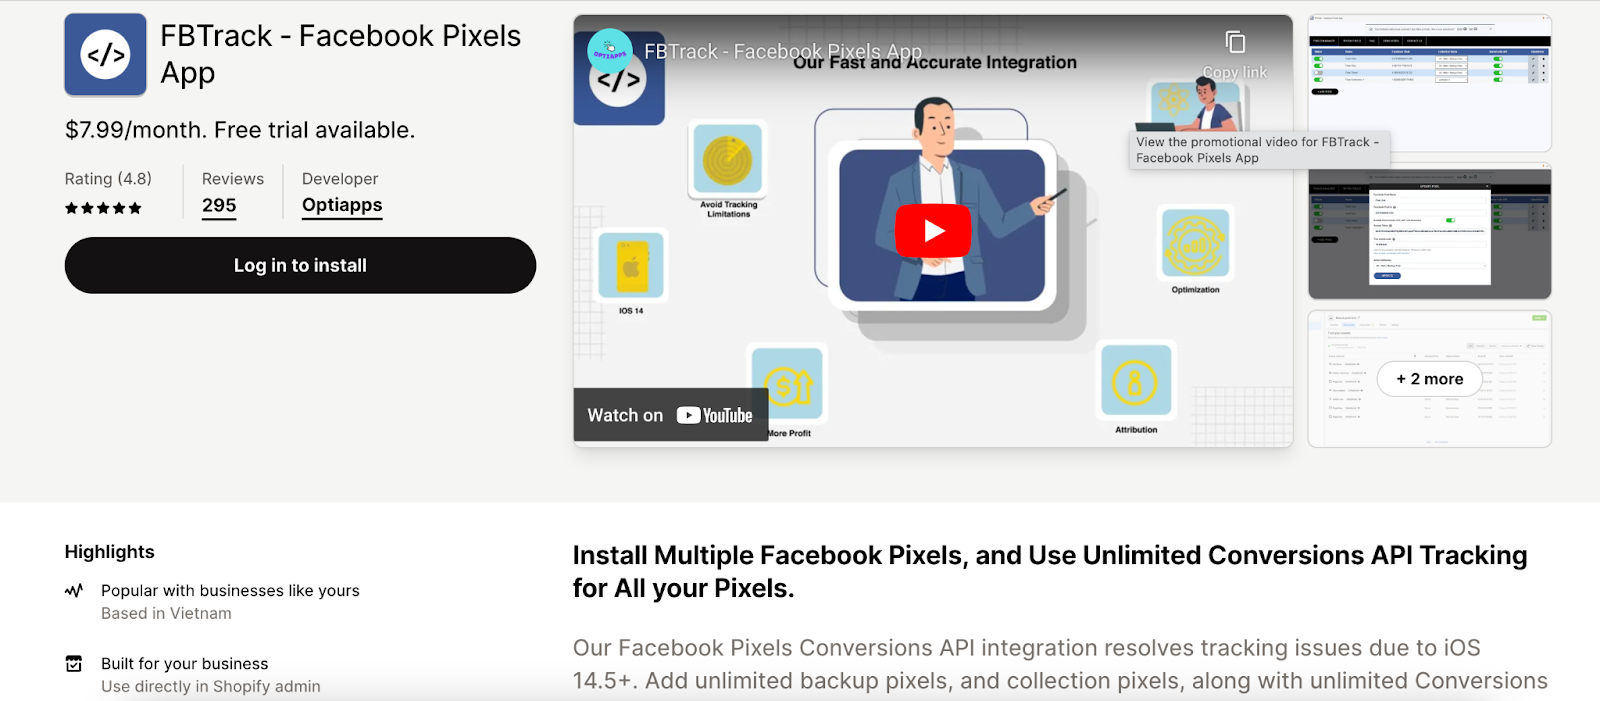 FBTrack ‑ Facebook Pixels App